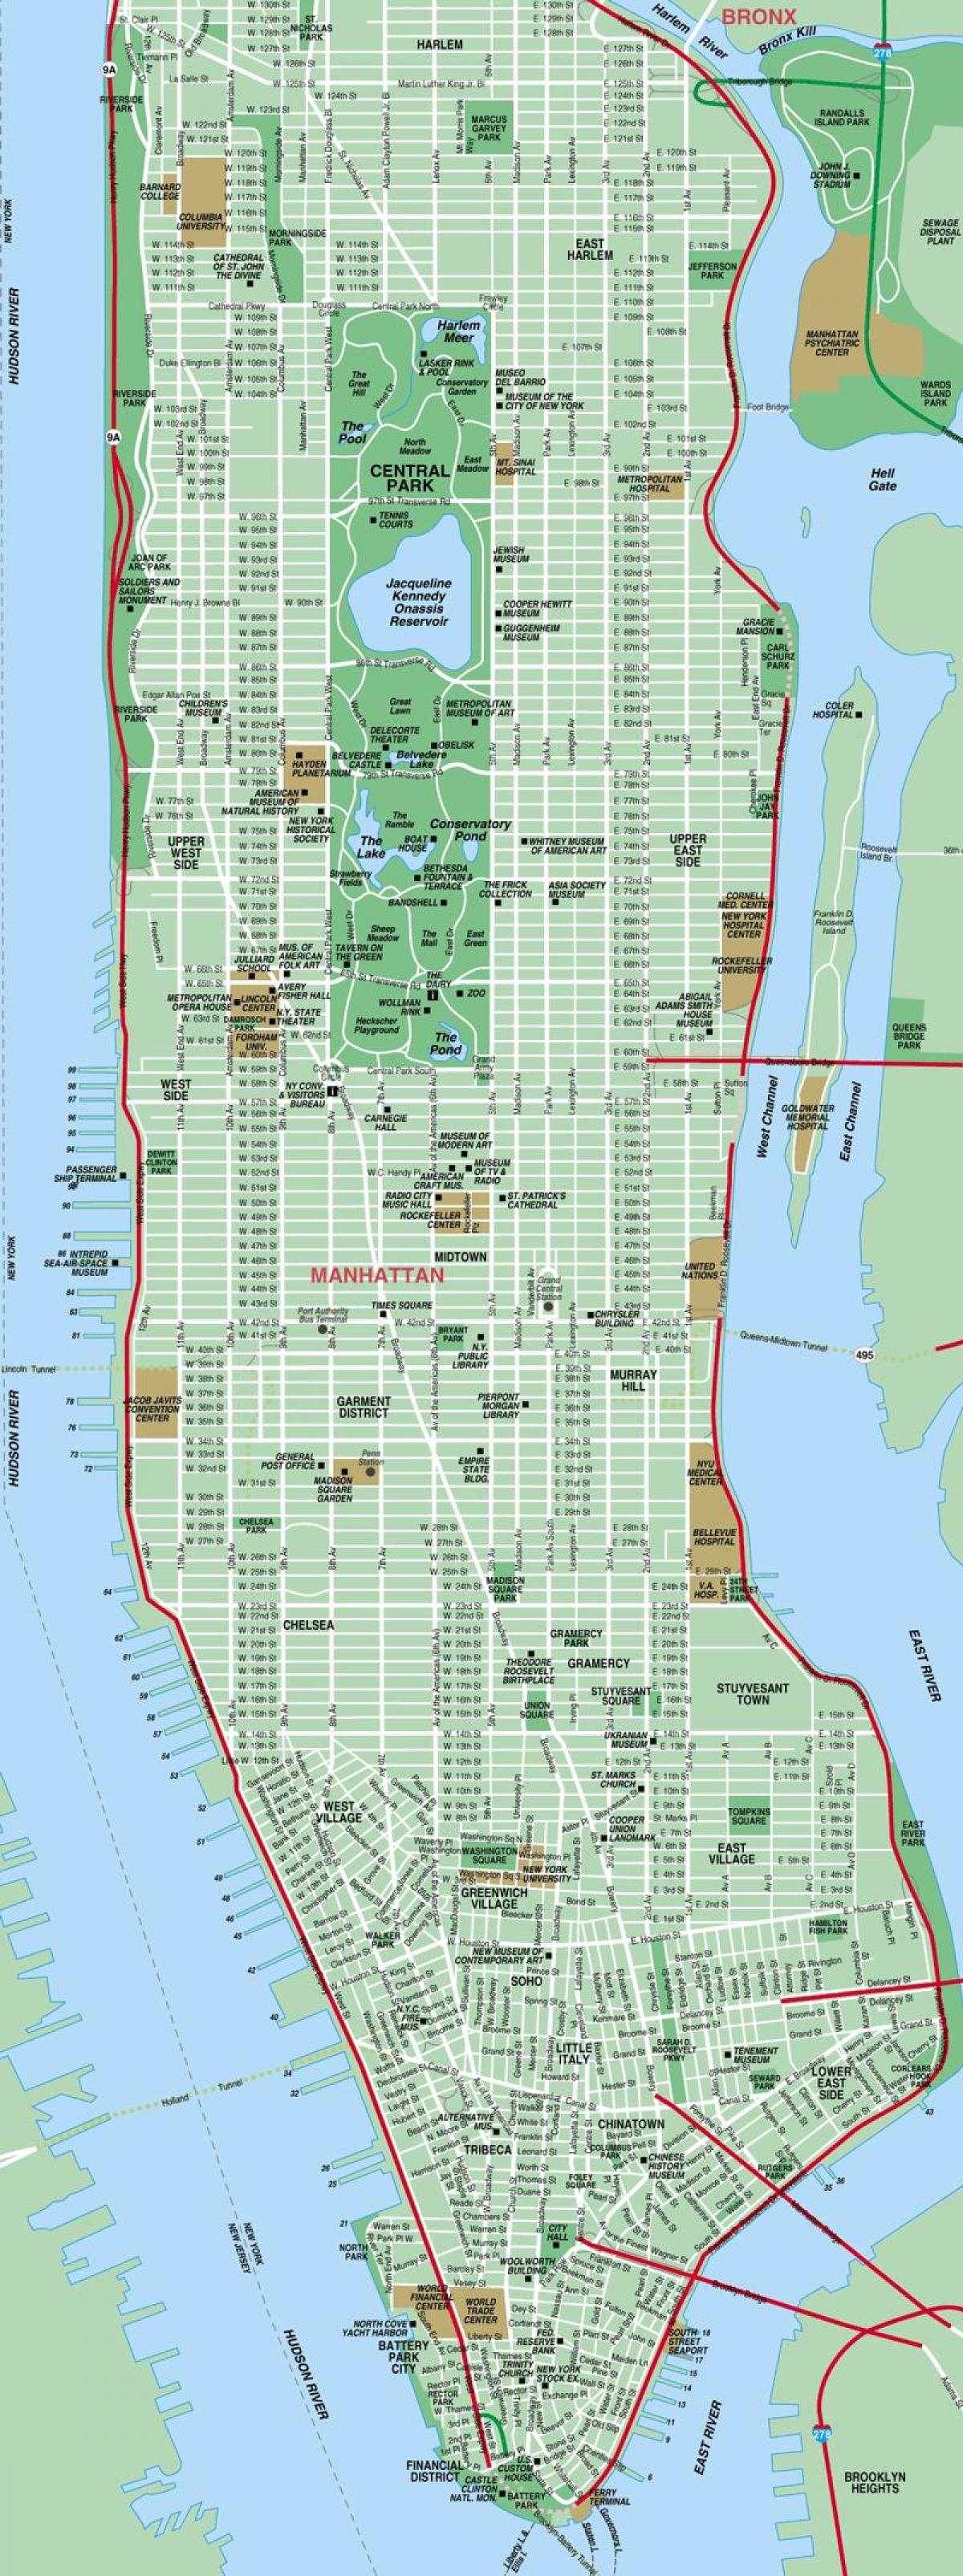 Manhattan carte des routes